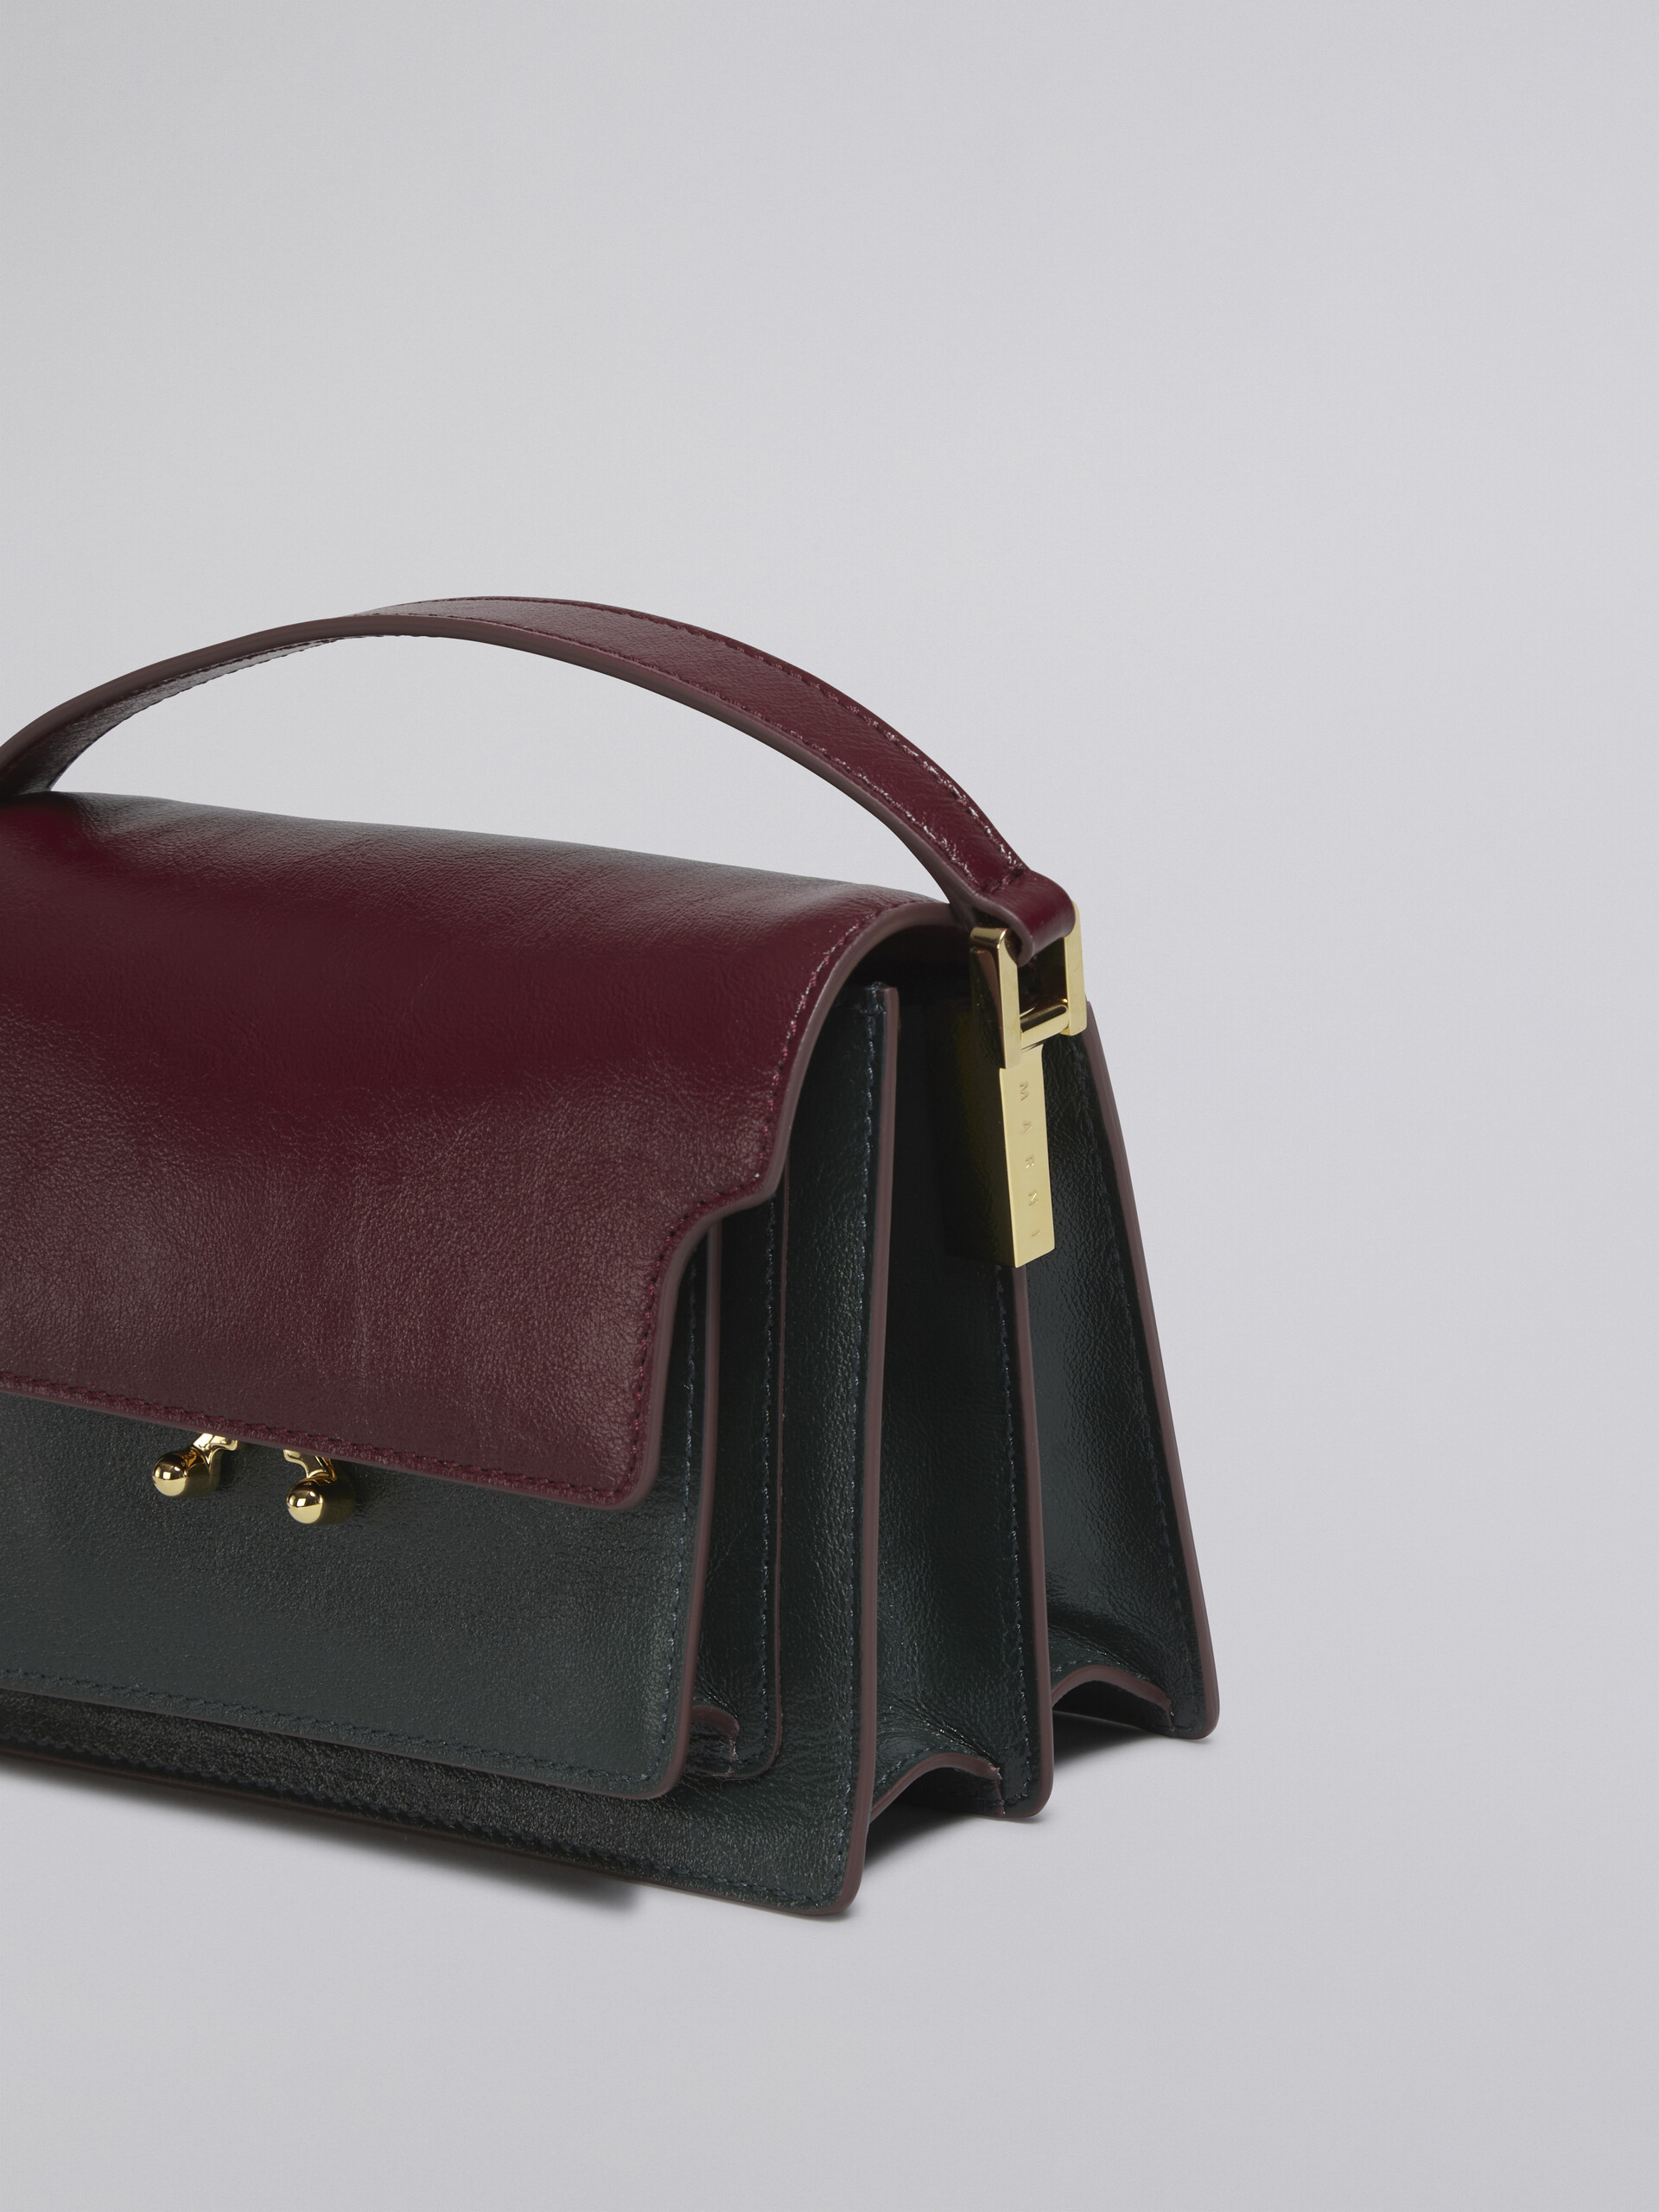 TRUNK SOFT bag in green and burgundy tumbled calf - Shoulder Bag - Image 3